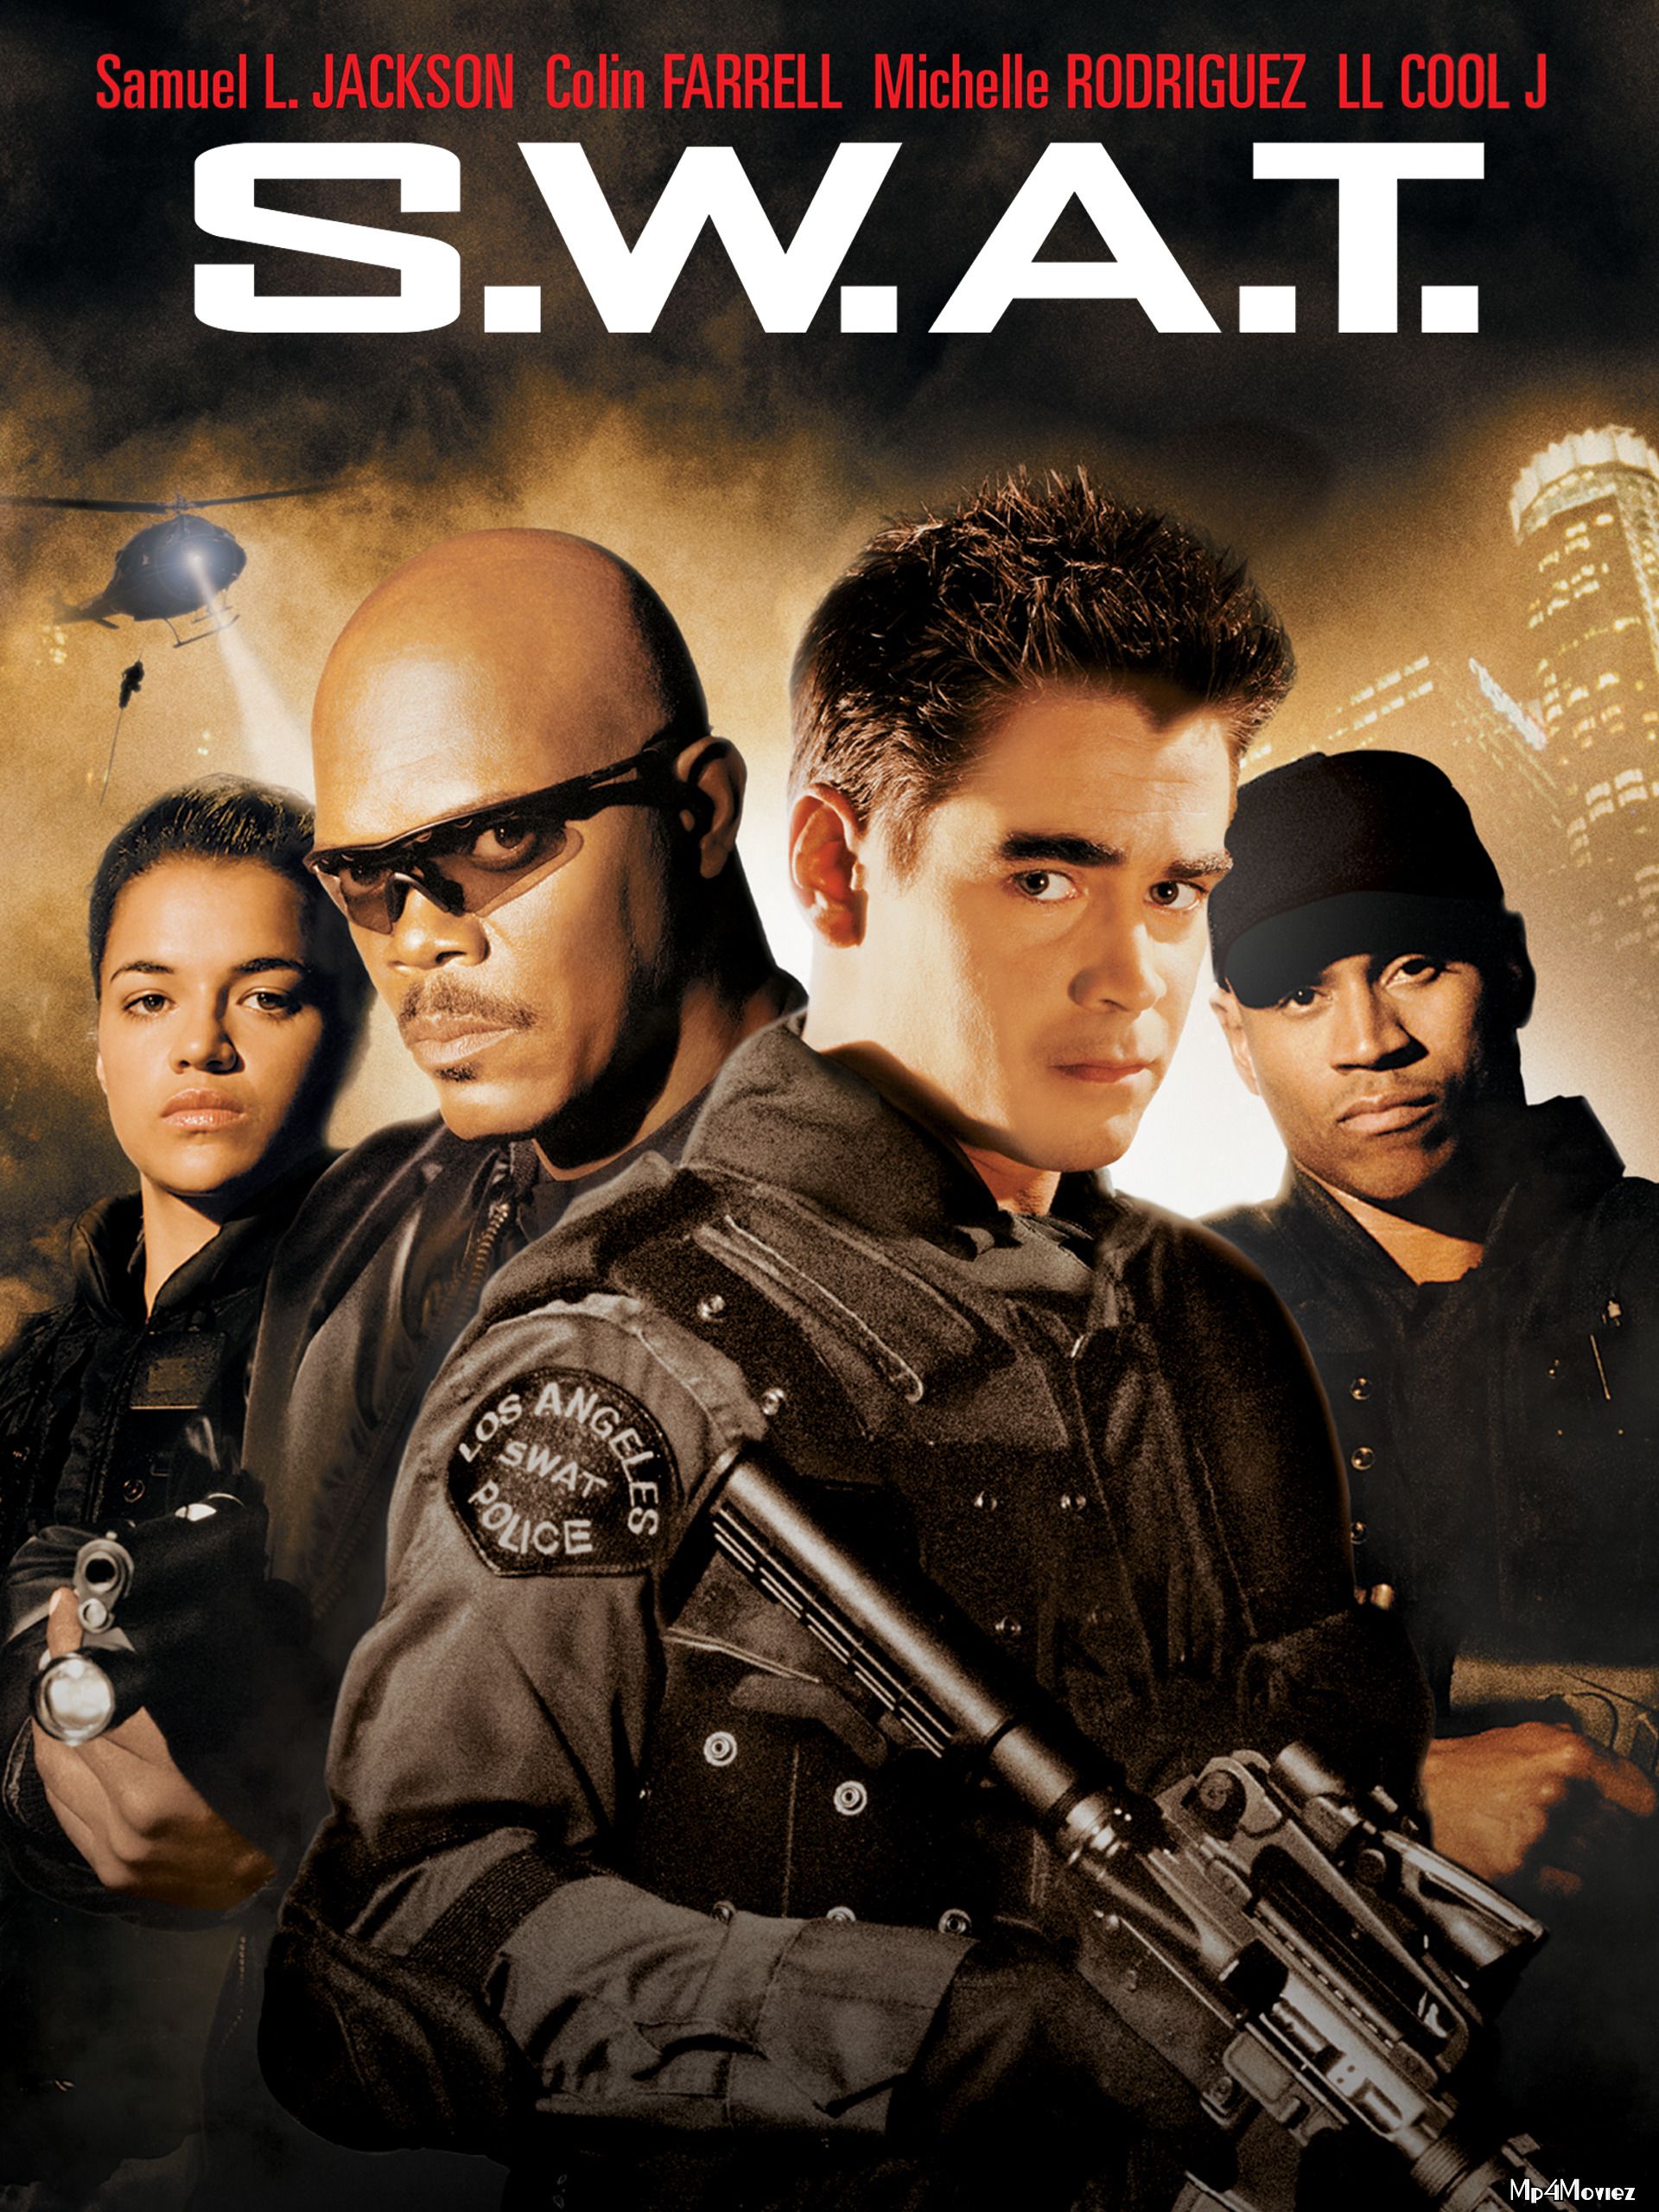 SWAT 2003 Hindi Dubbed Full Movie download full movie